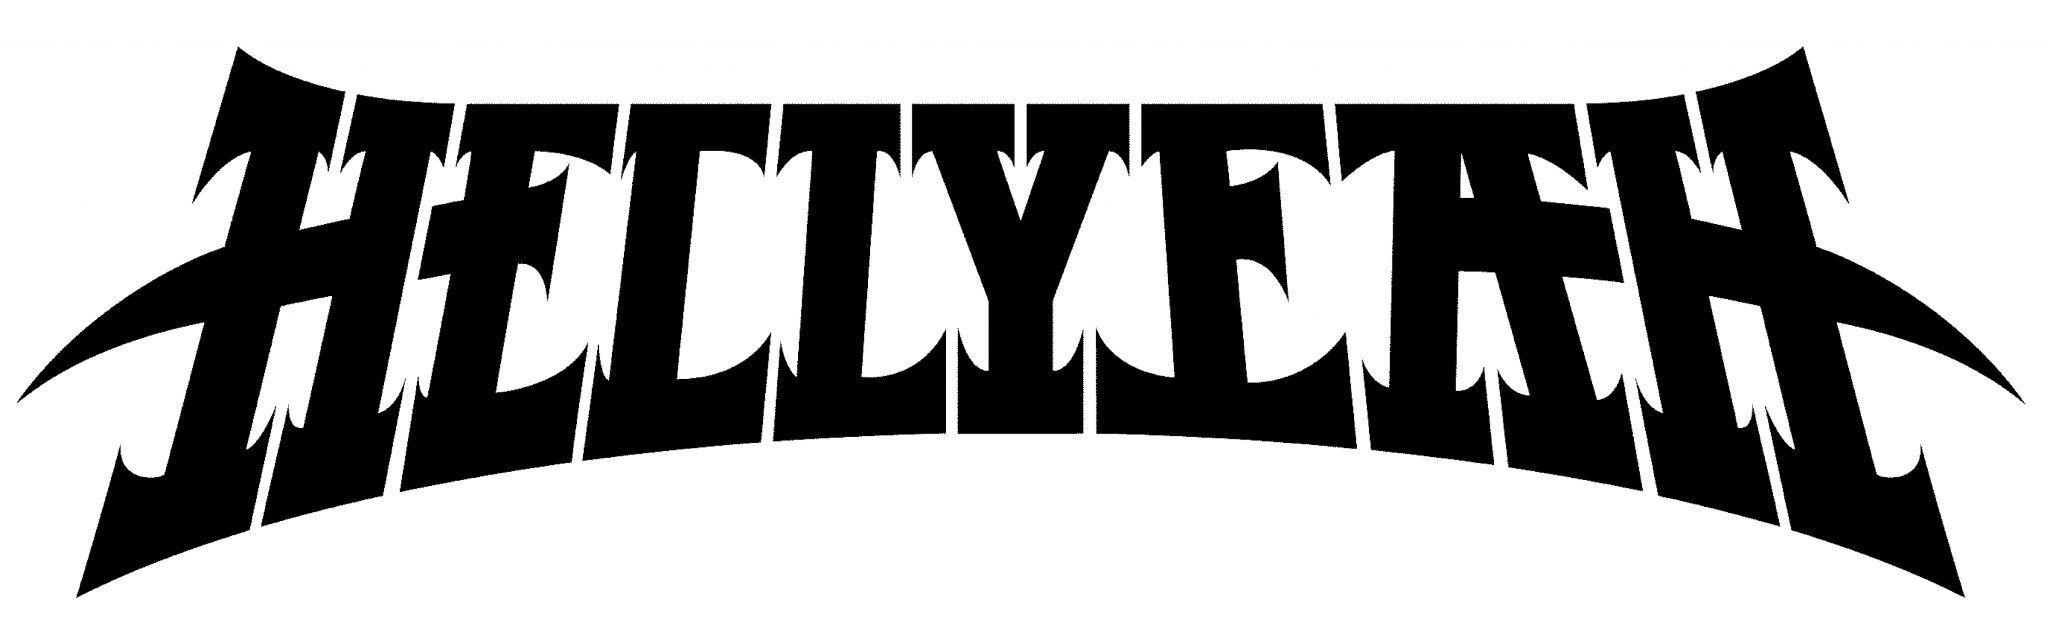 Hellyeah Logo - hellyeah logo ghostcultmag. Ghost Cult Magazine